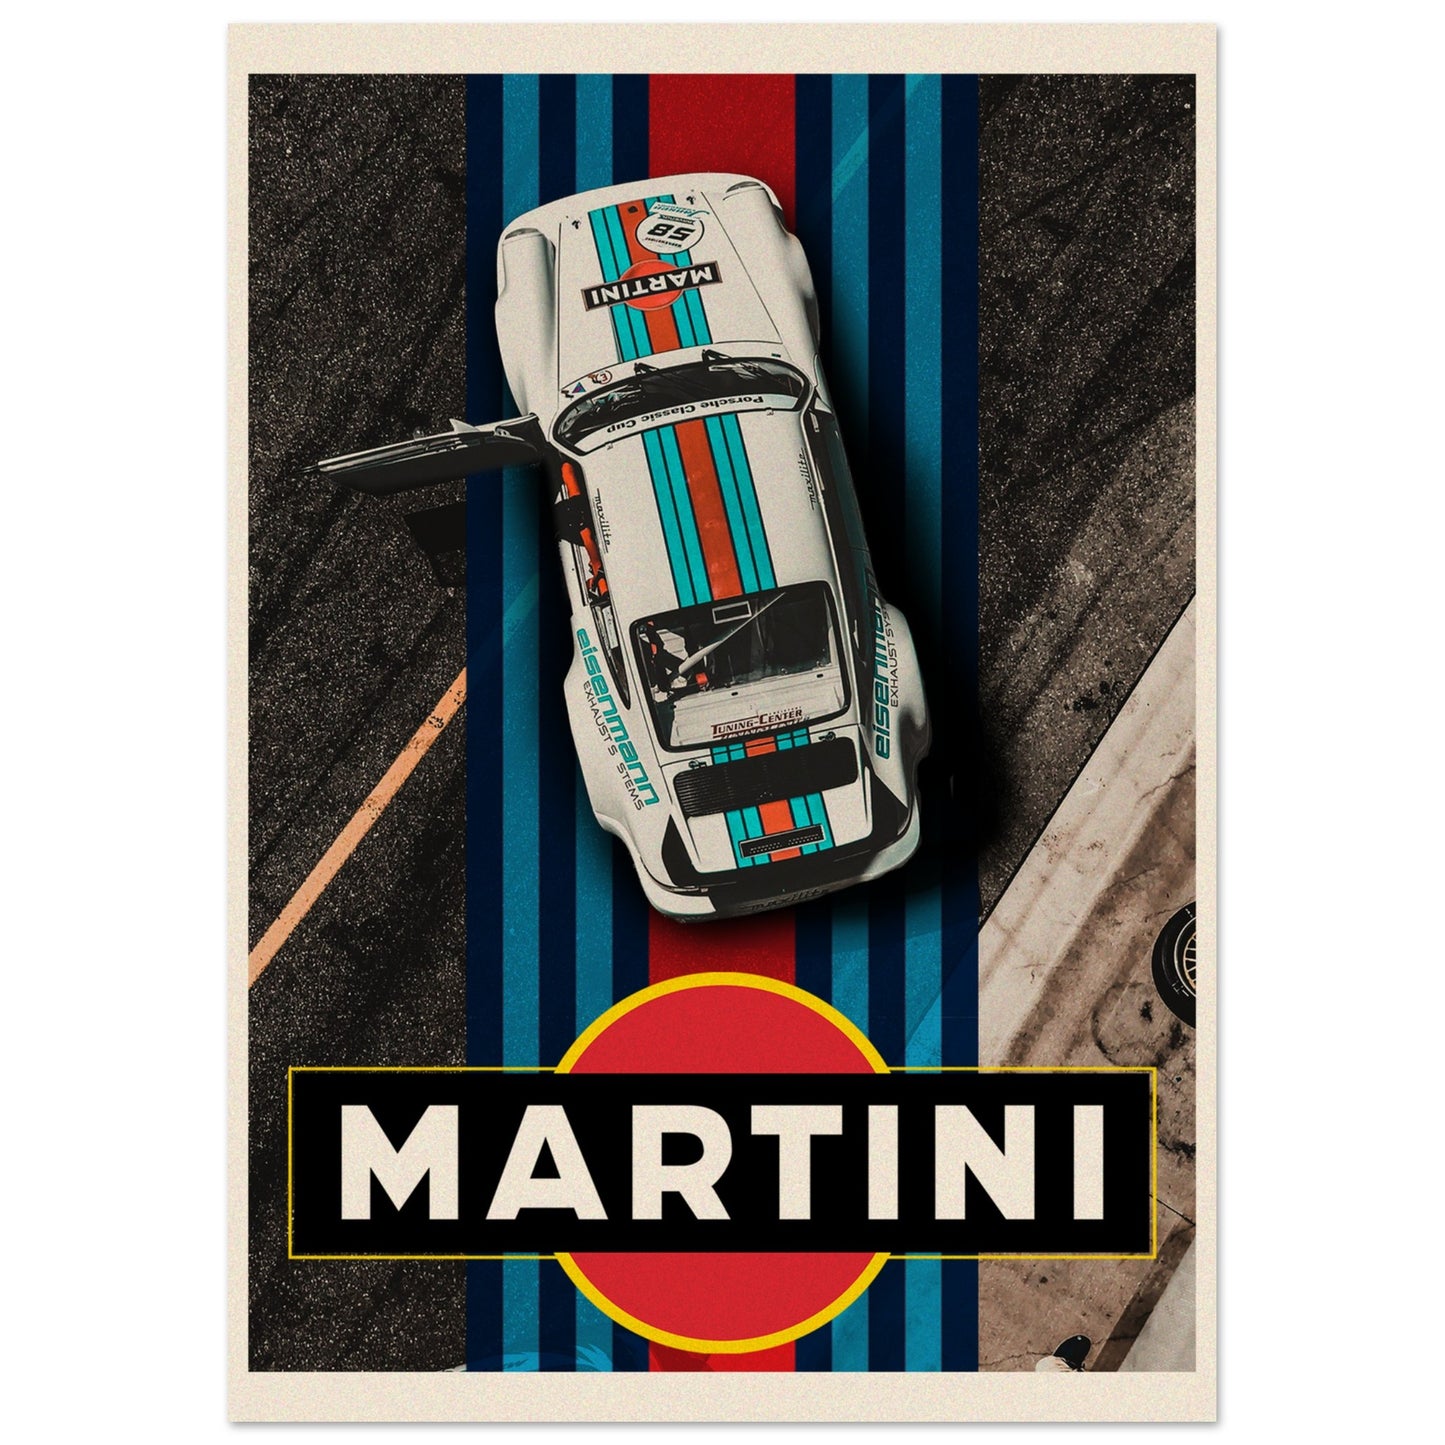 Martini Racing - Poster